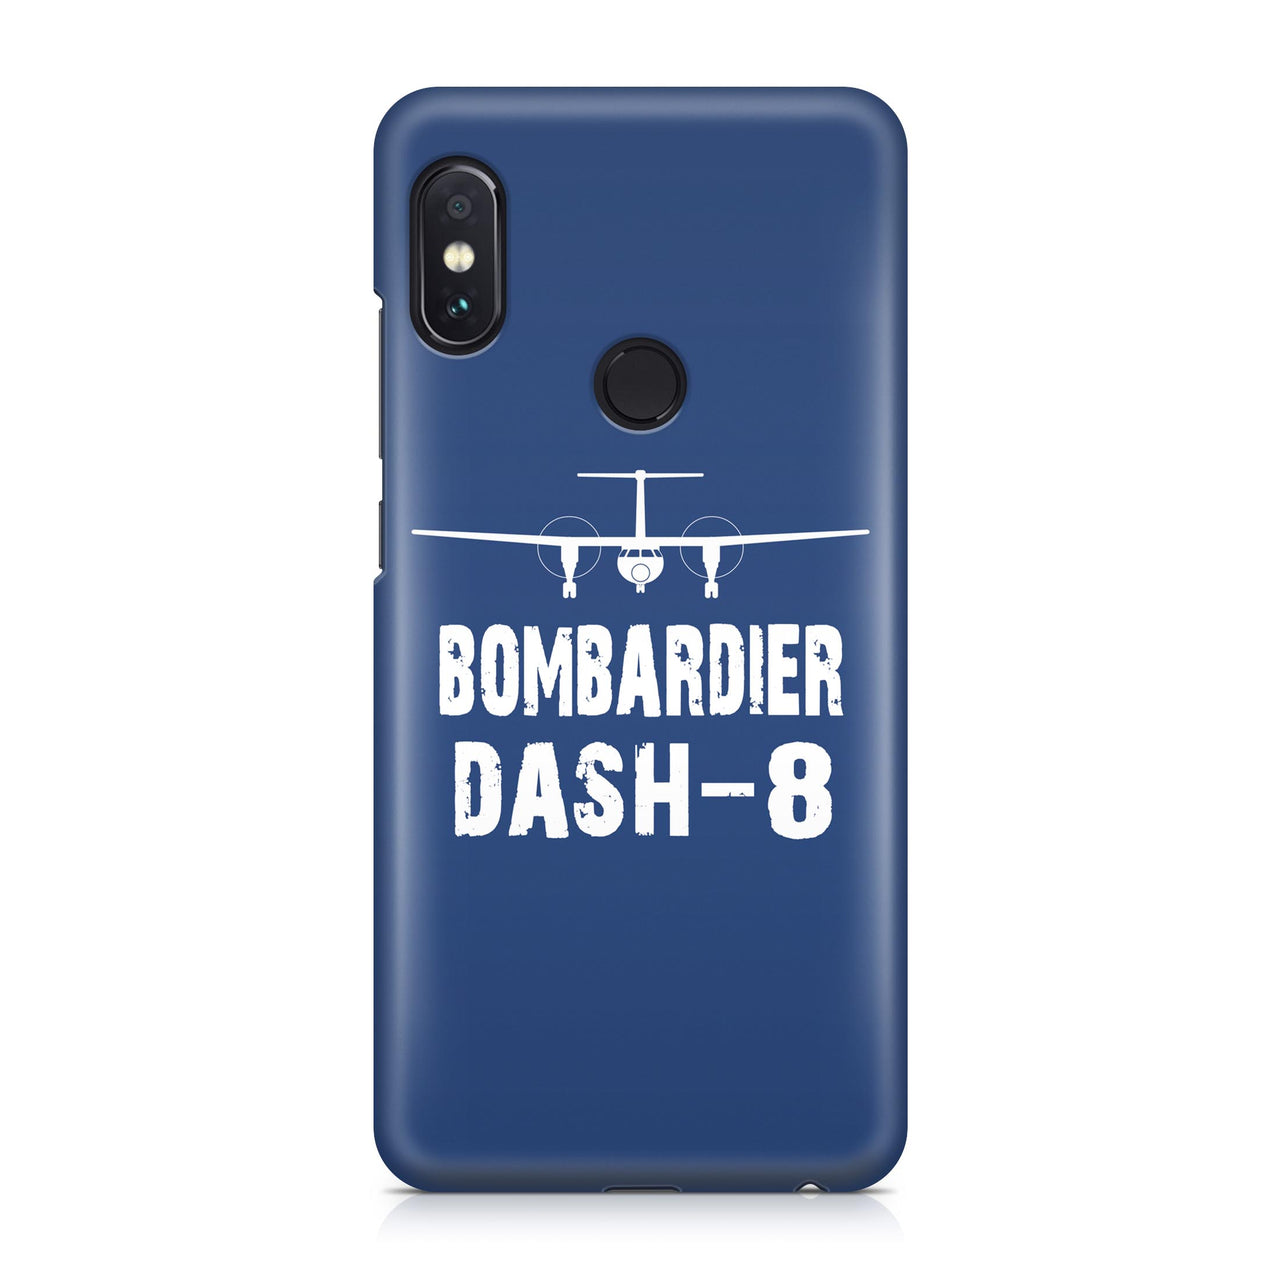 Bombardier Dash-8 Plane & Designed Xiaomi Cases